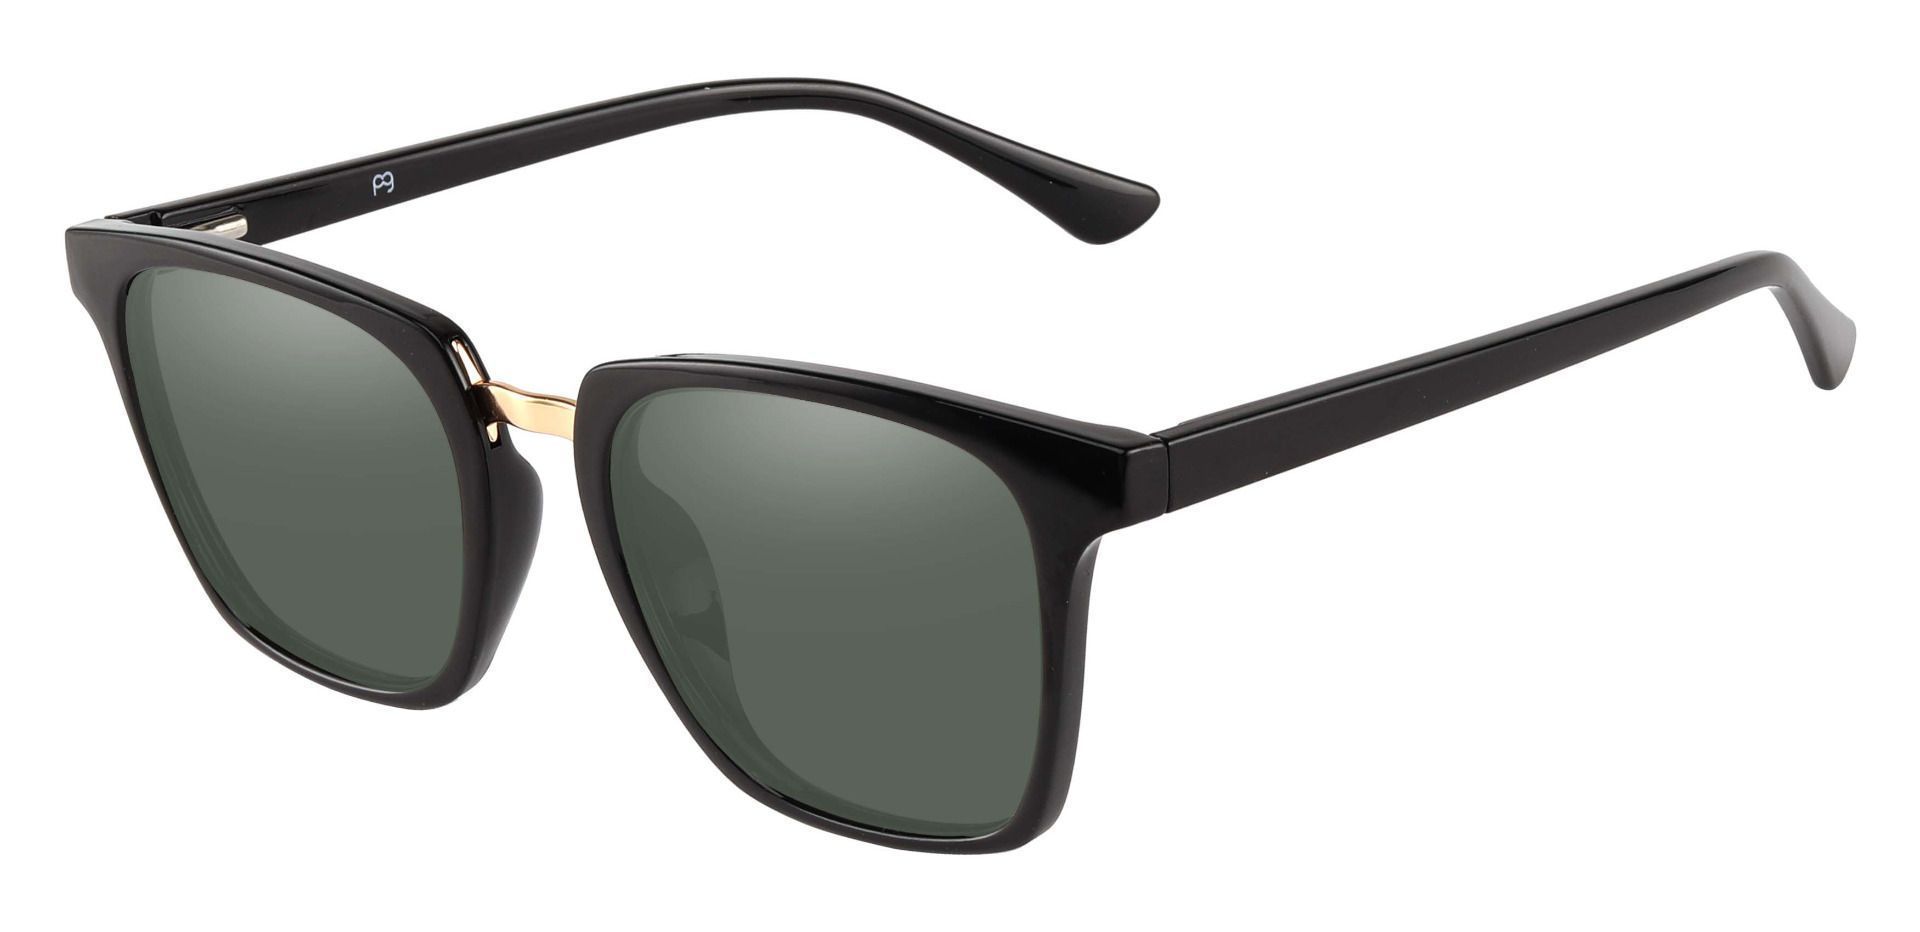 Delta Square Progressive Sunglasses - Black Frame With Green Lenses